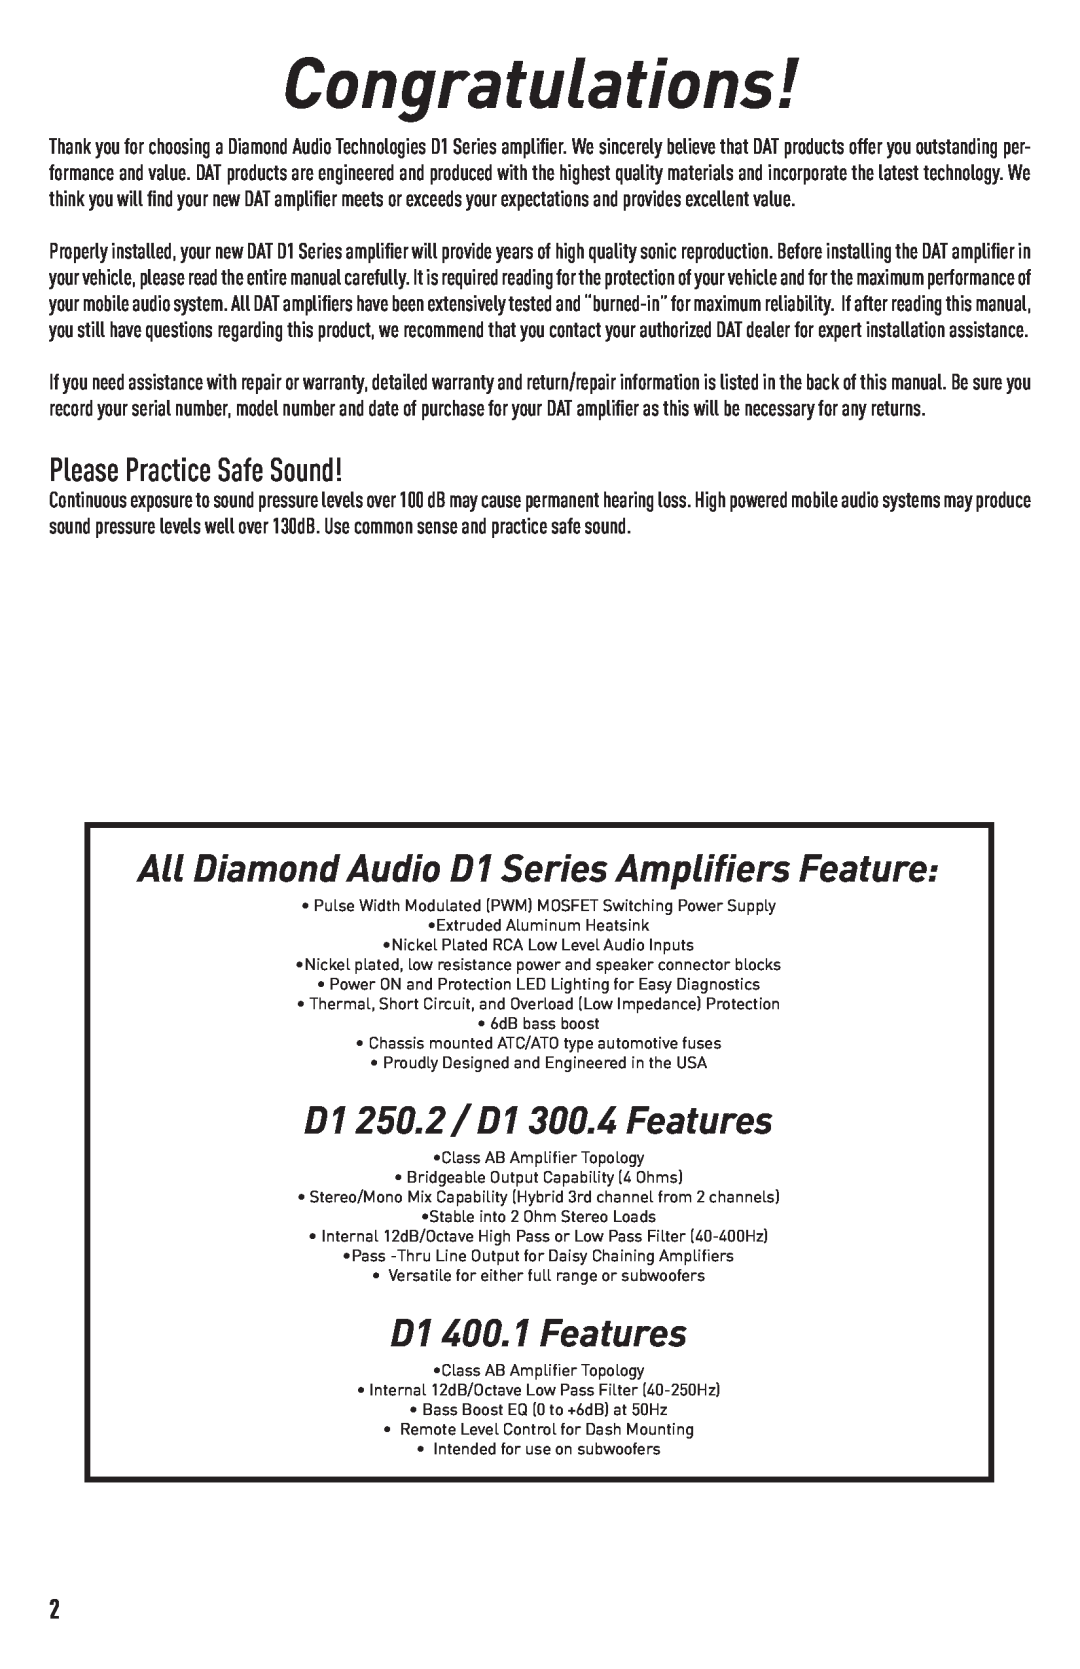 Diamond Audio Technology D1 250.2 Congratulations, All Diamond Audio D1 Series Amplifiers Feature, D1 400.1 Features 